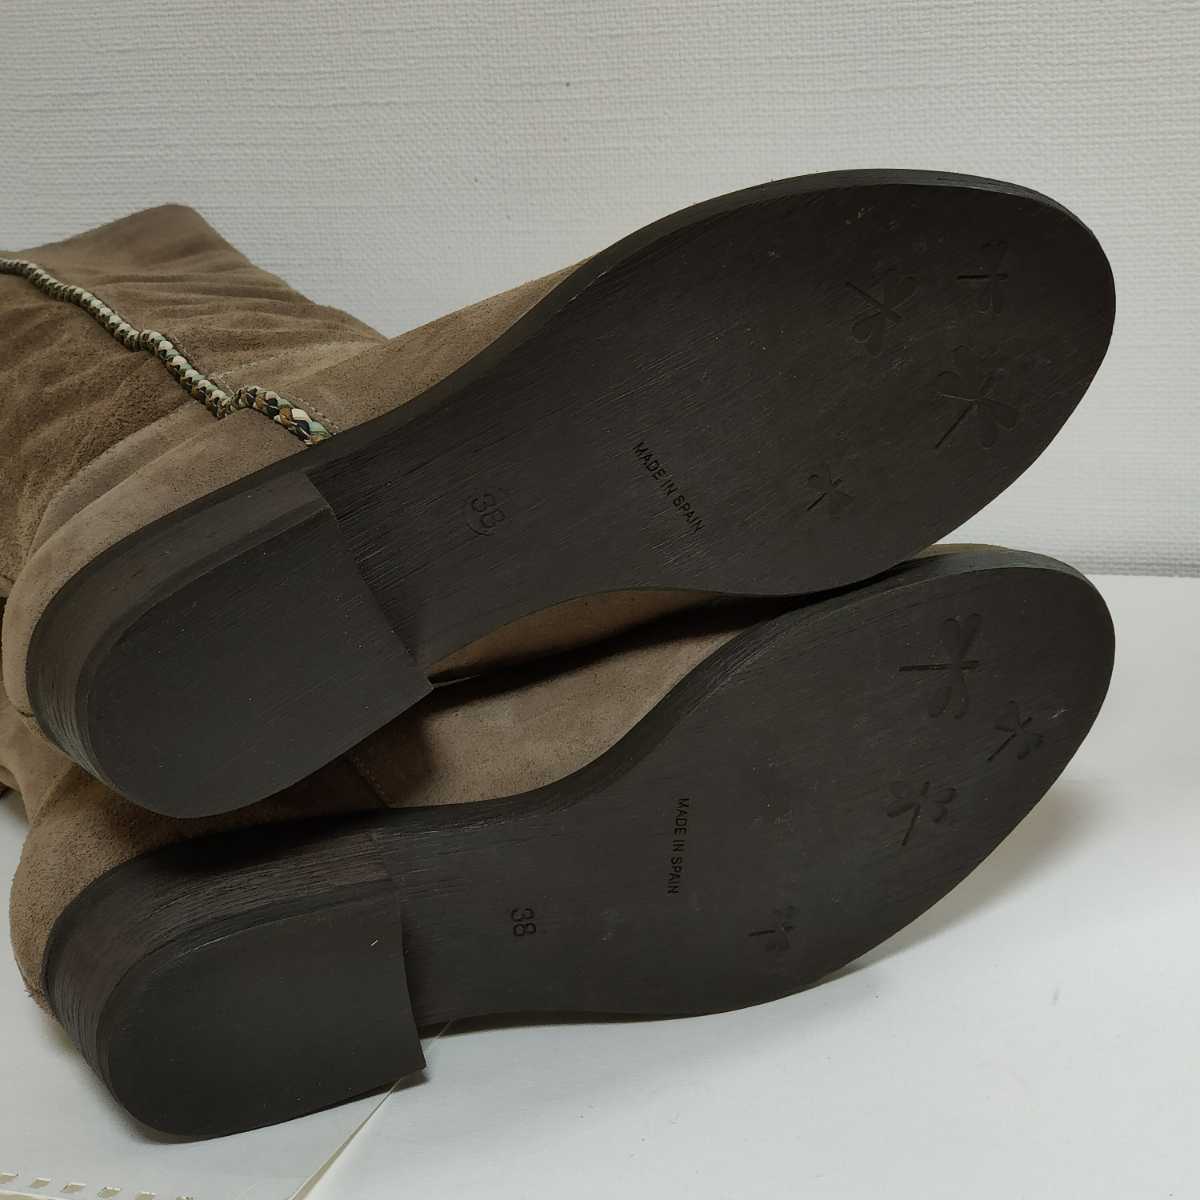  beautiful goods gaimogaimo original leather suede material long boots 24cm